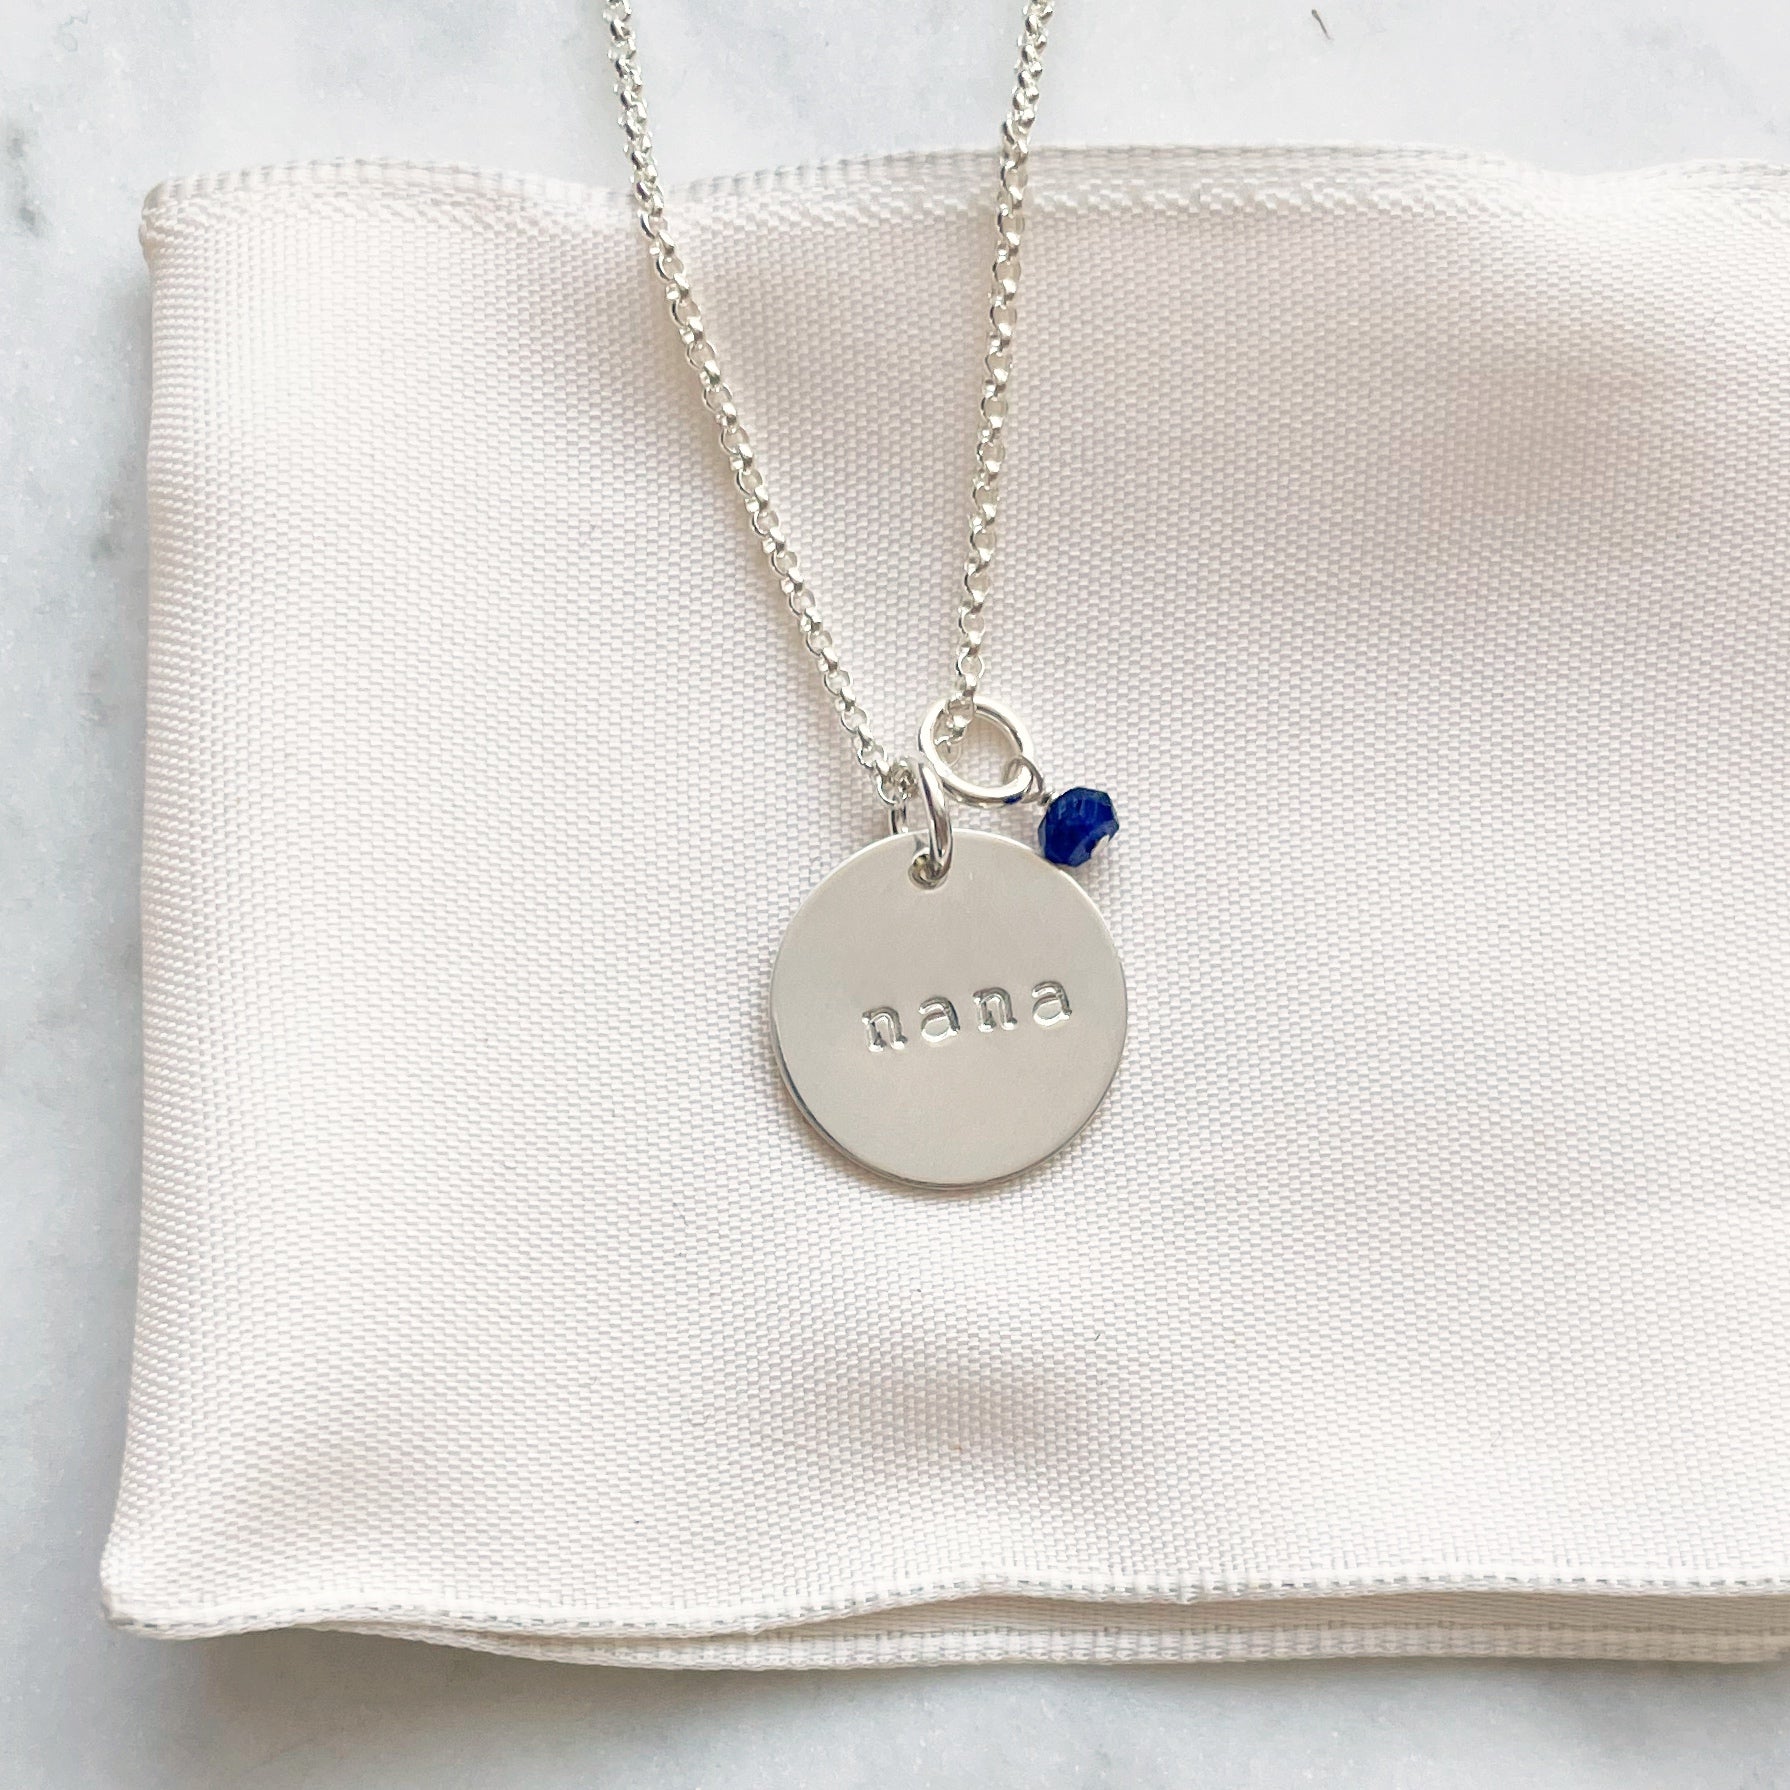 Silver nana disc and wire wrapped gemstone necklace with a blue gemstone. Gigi Necklace by Sarah Cornwell Jewelry